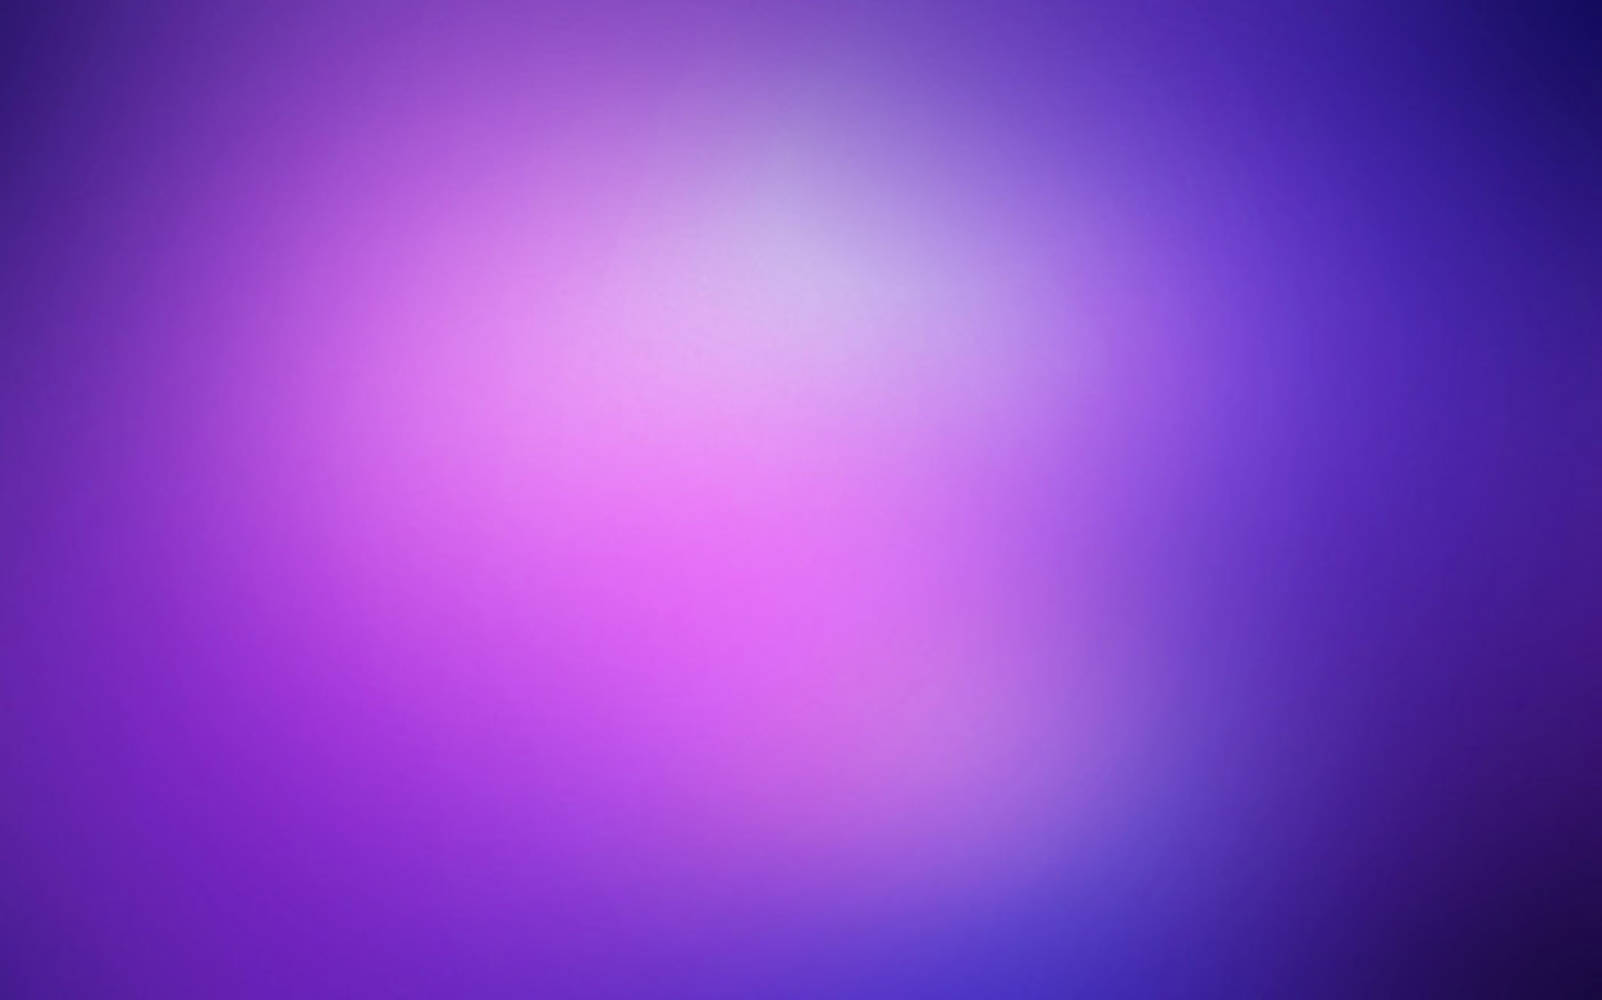 Solid Pastel Purple Gradient Picture